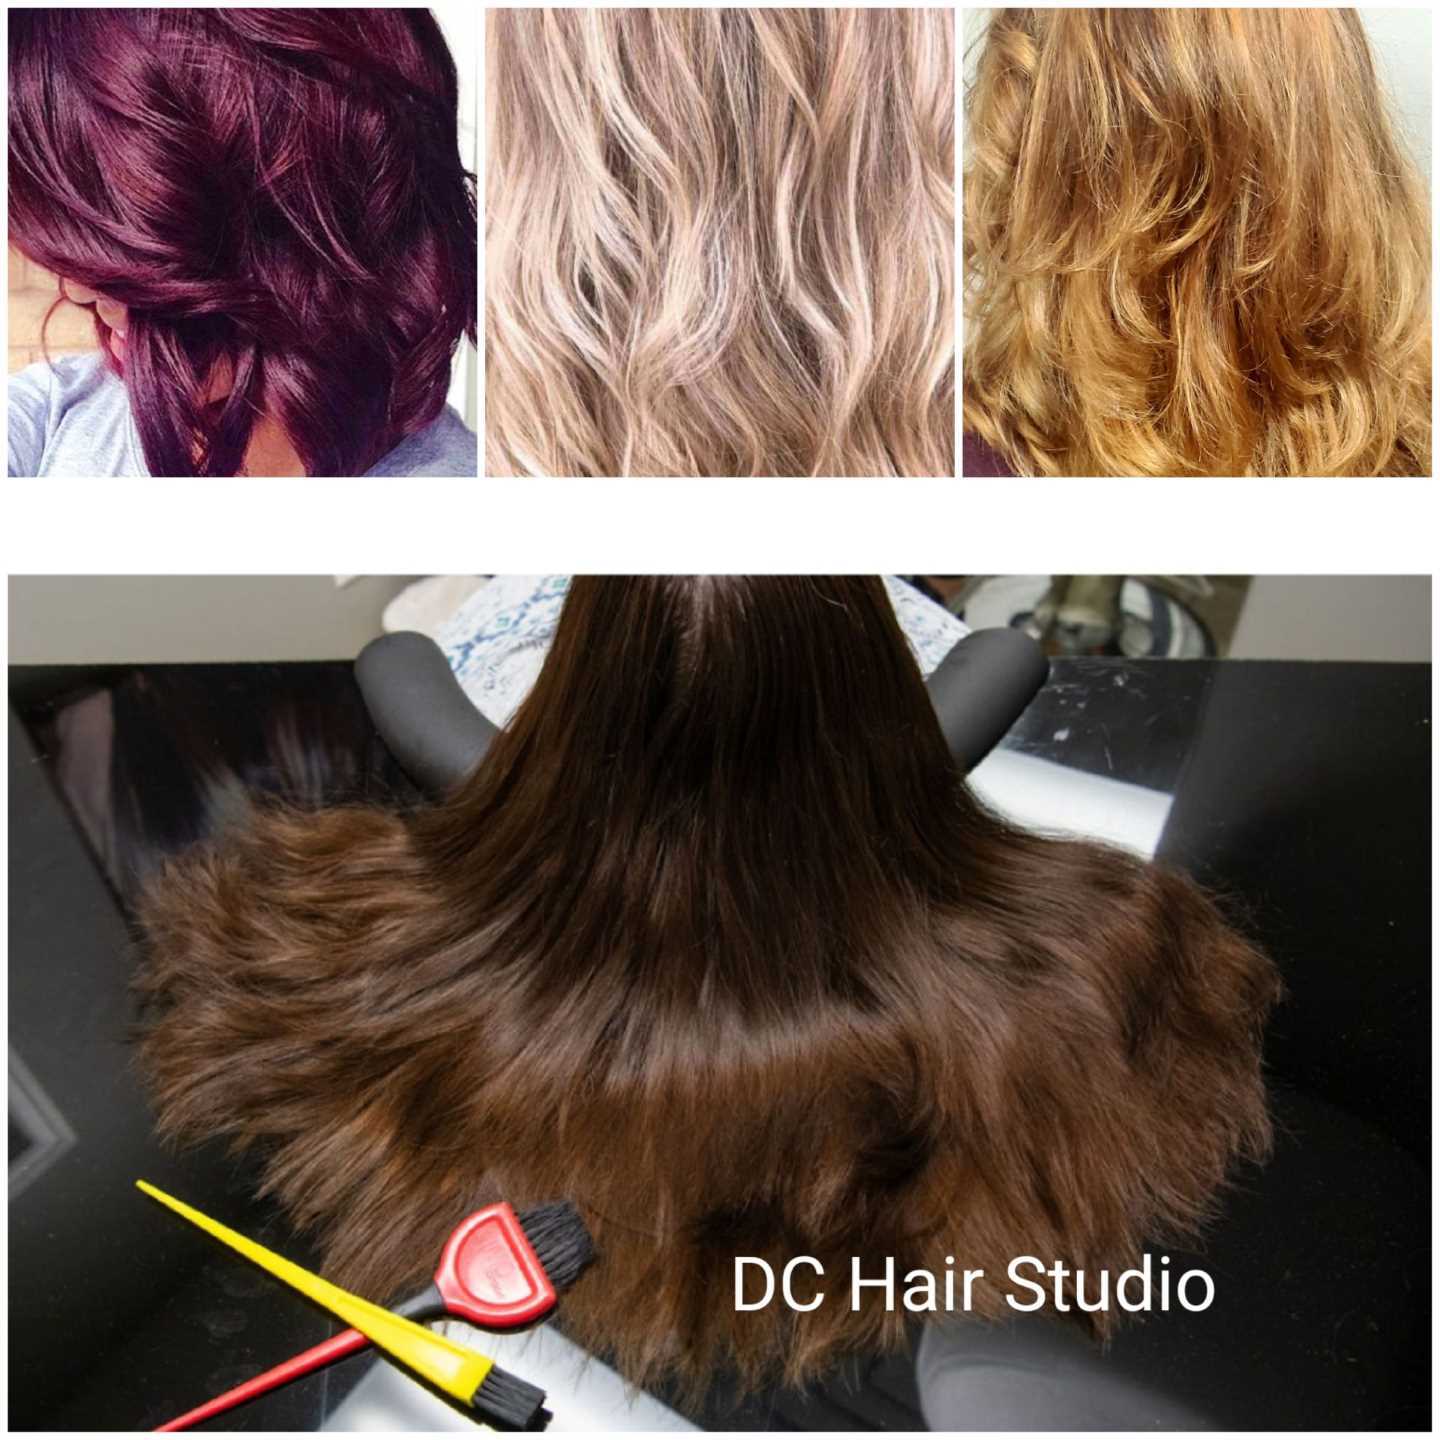 Color – DC Hair Studio